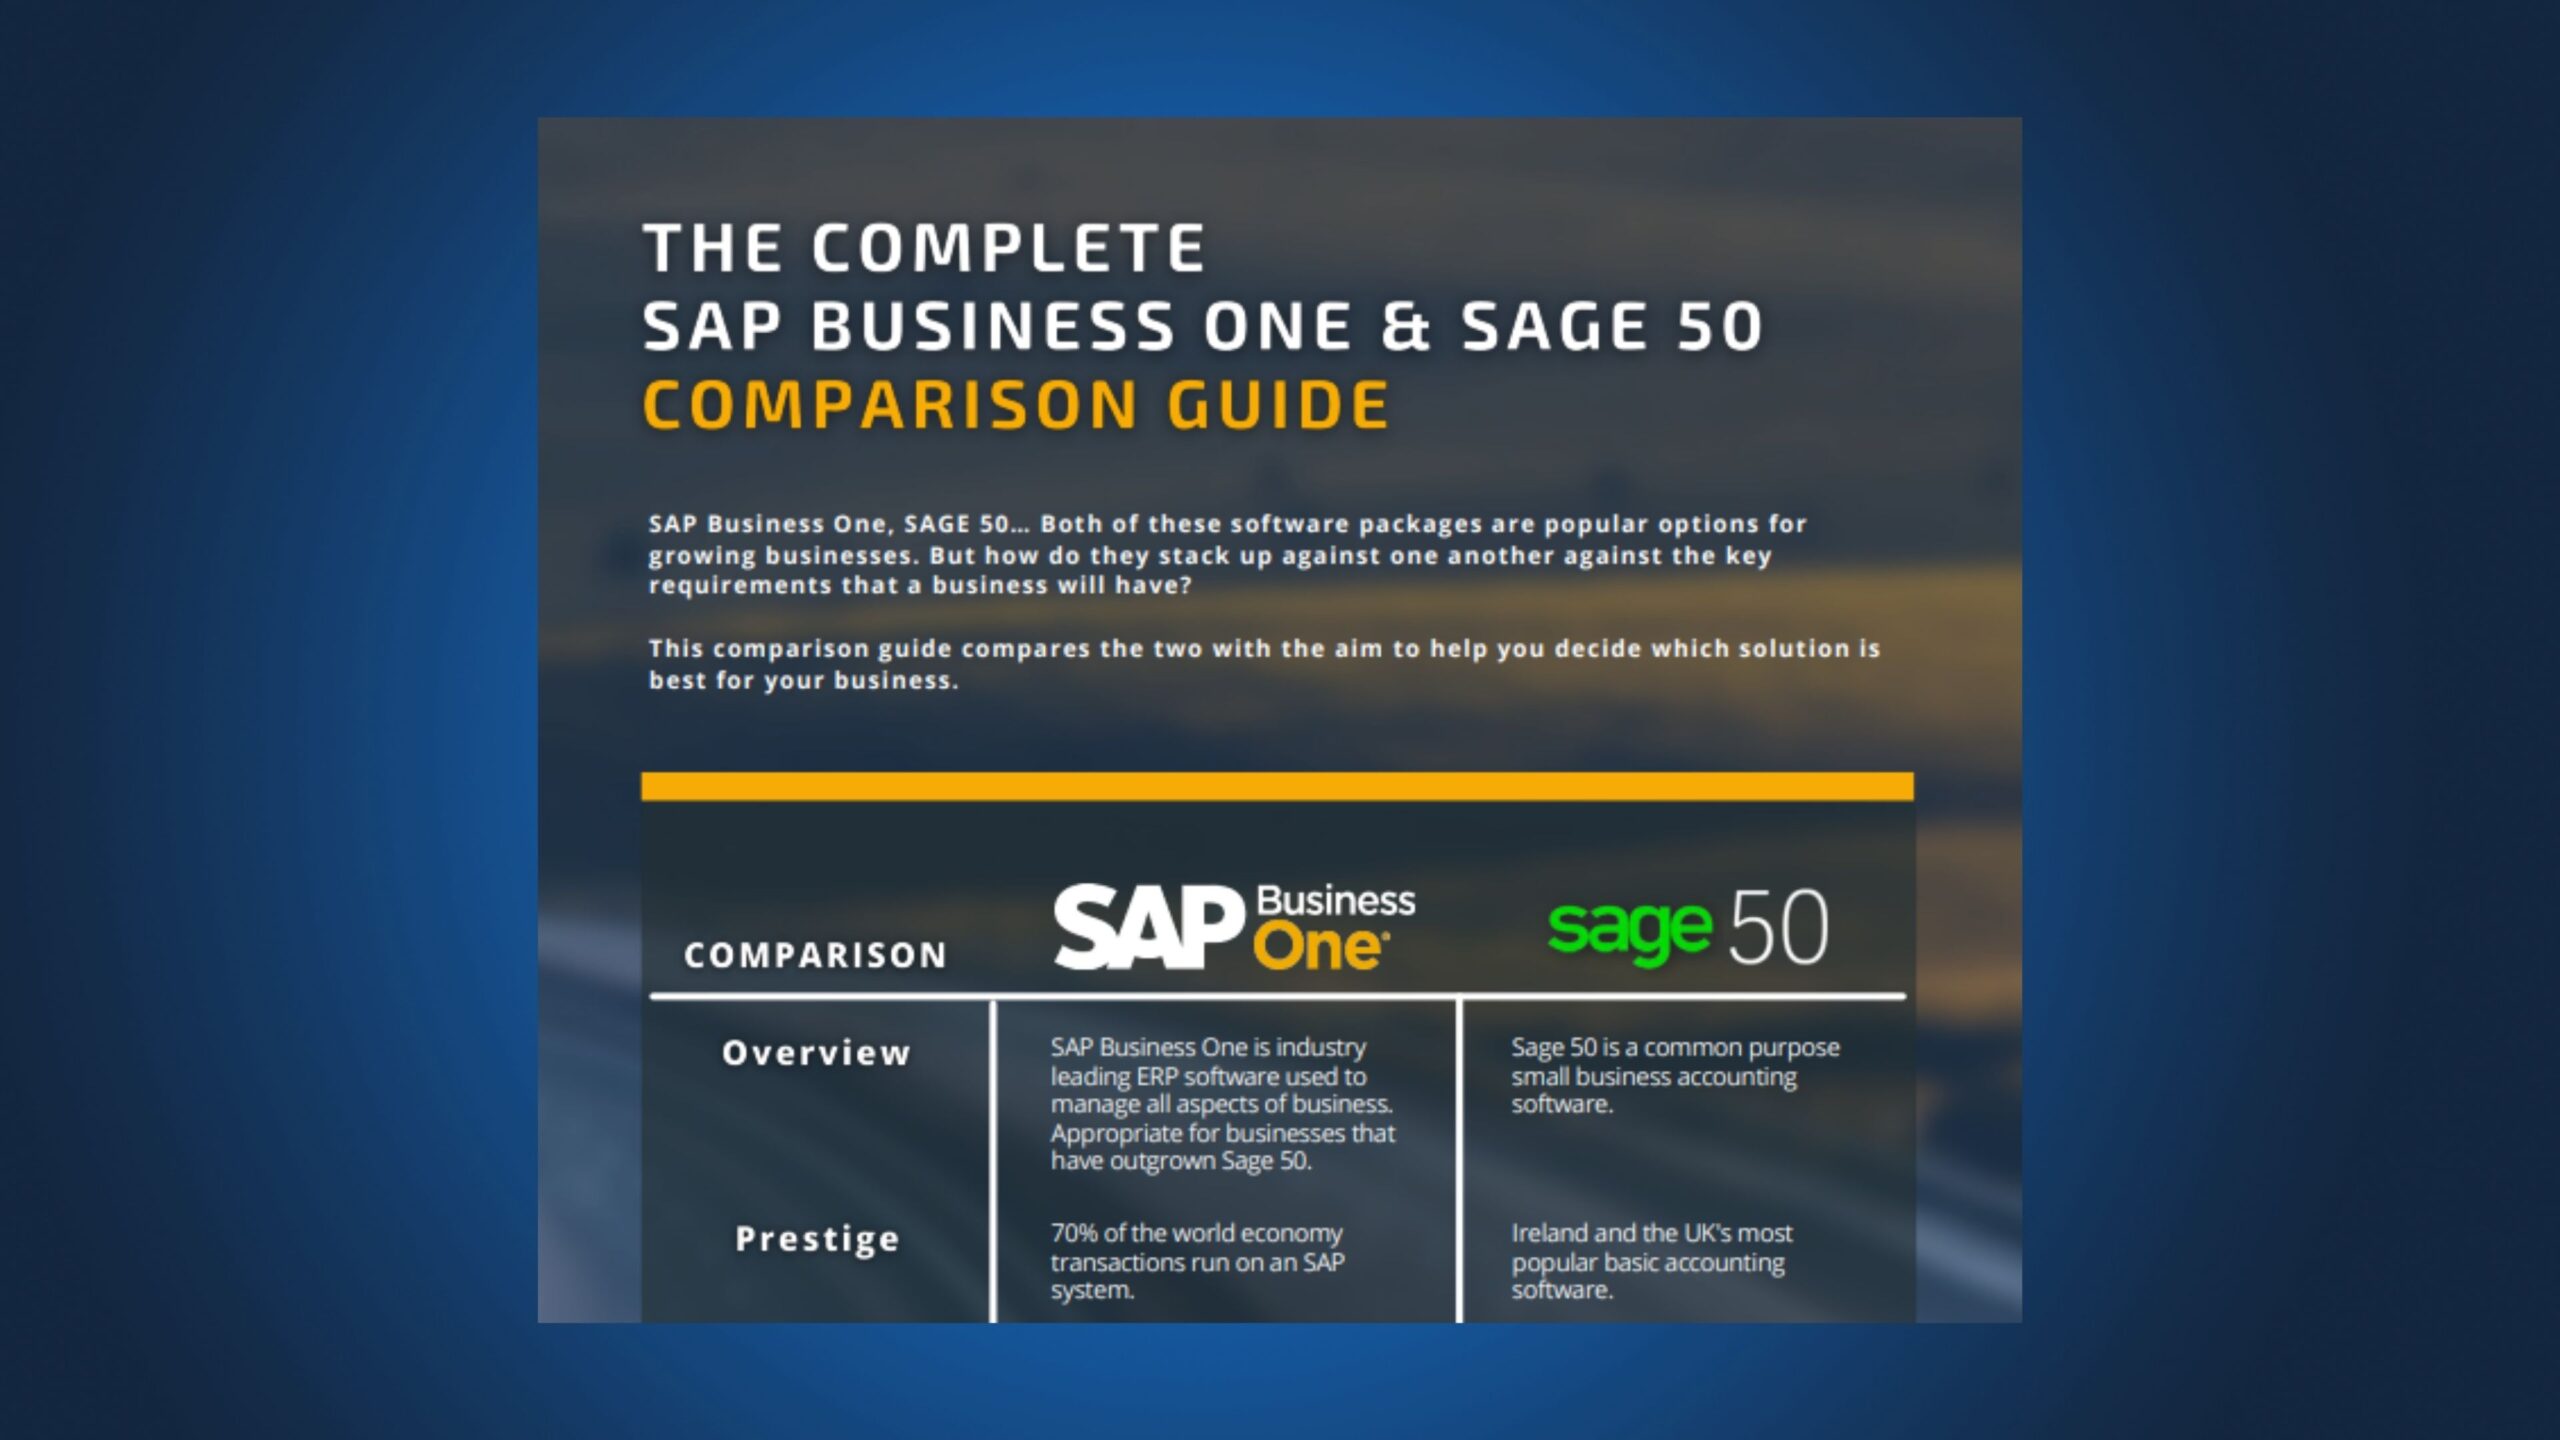 SAP Business One & Sage 50 Comparison Guide